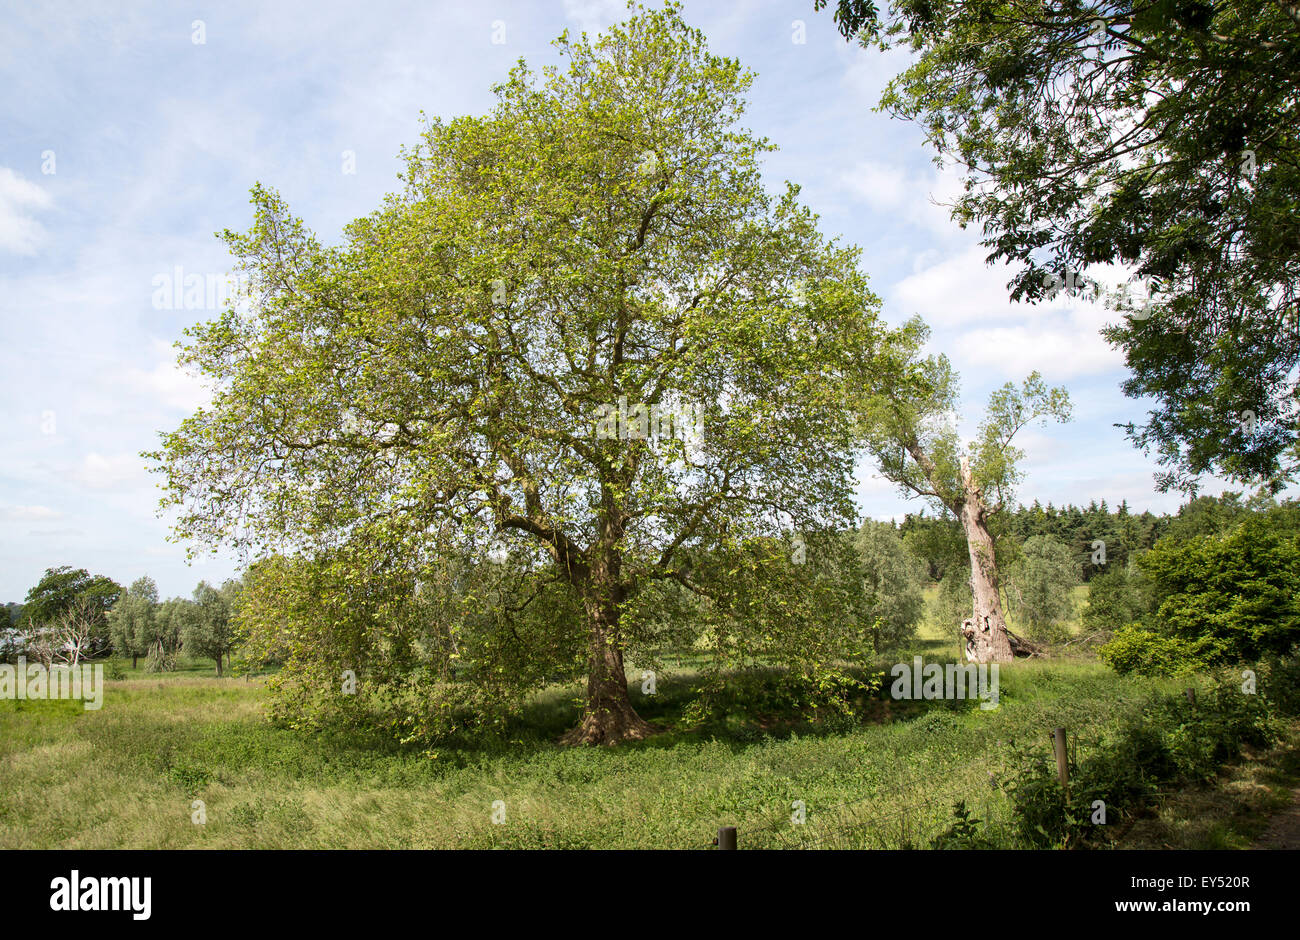 London plane tree growing in summer field, Sutton, Suffolk, England, UK Stock Photo